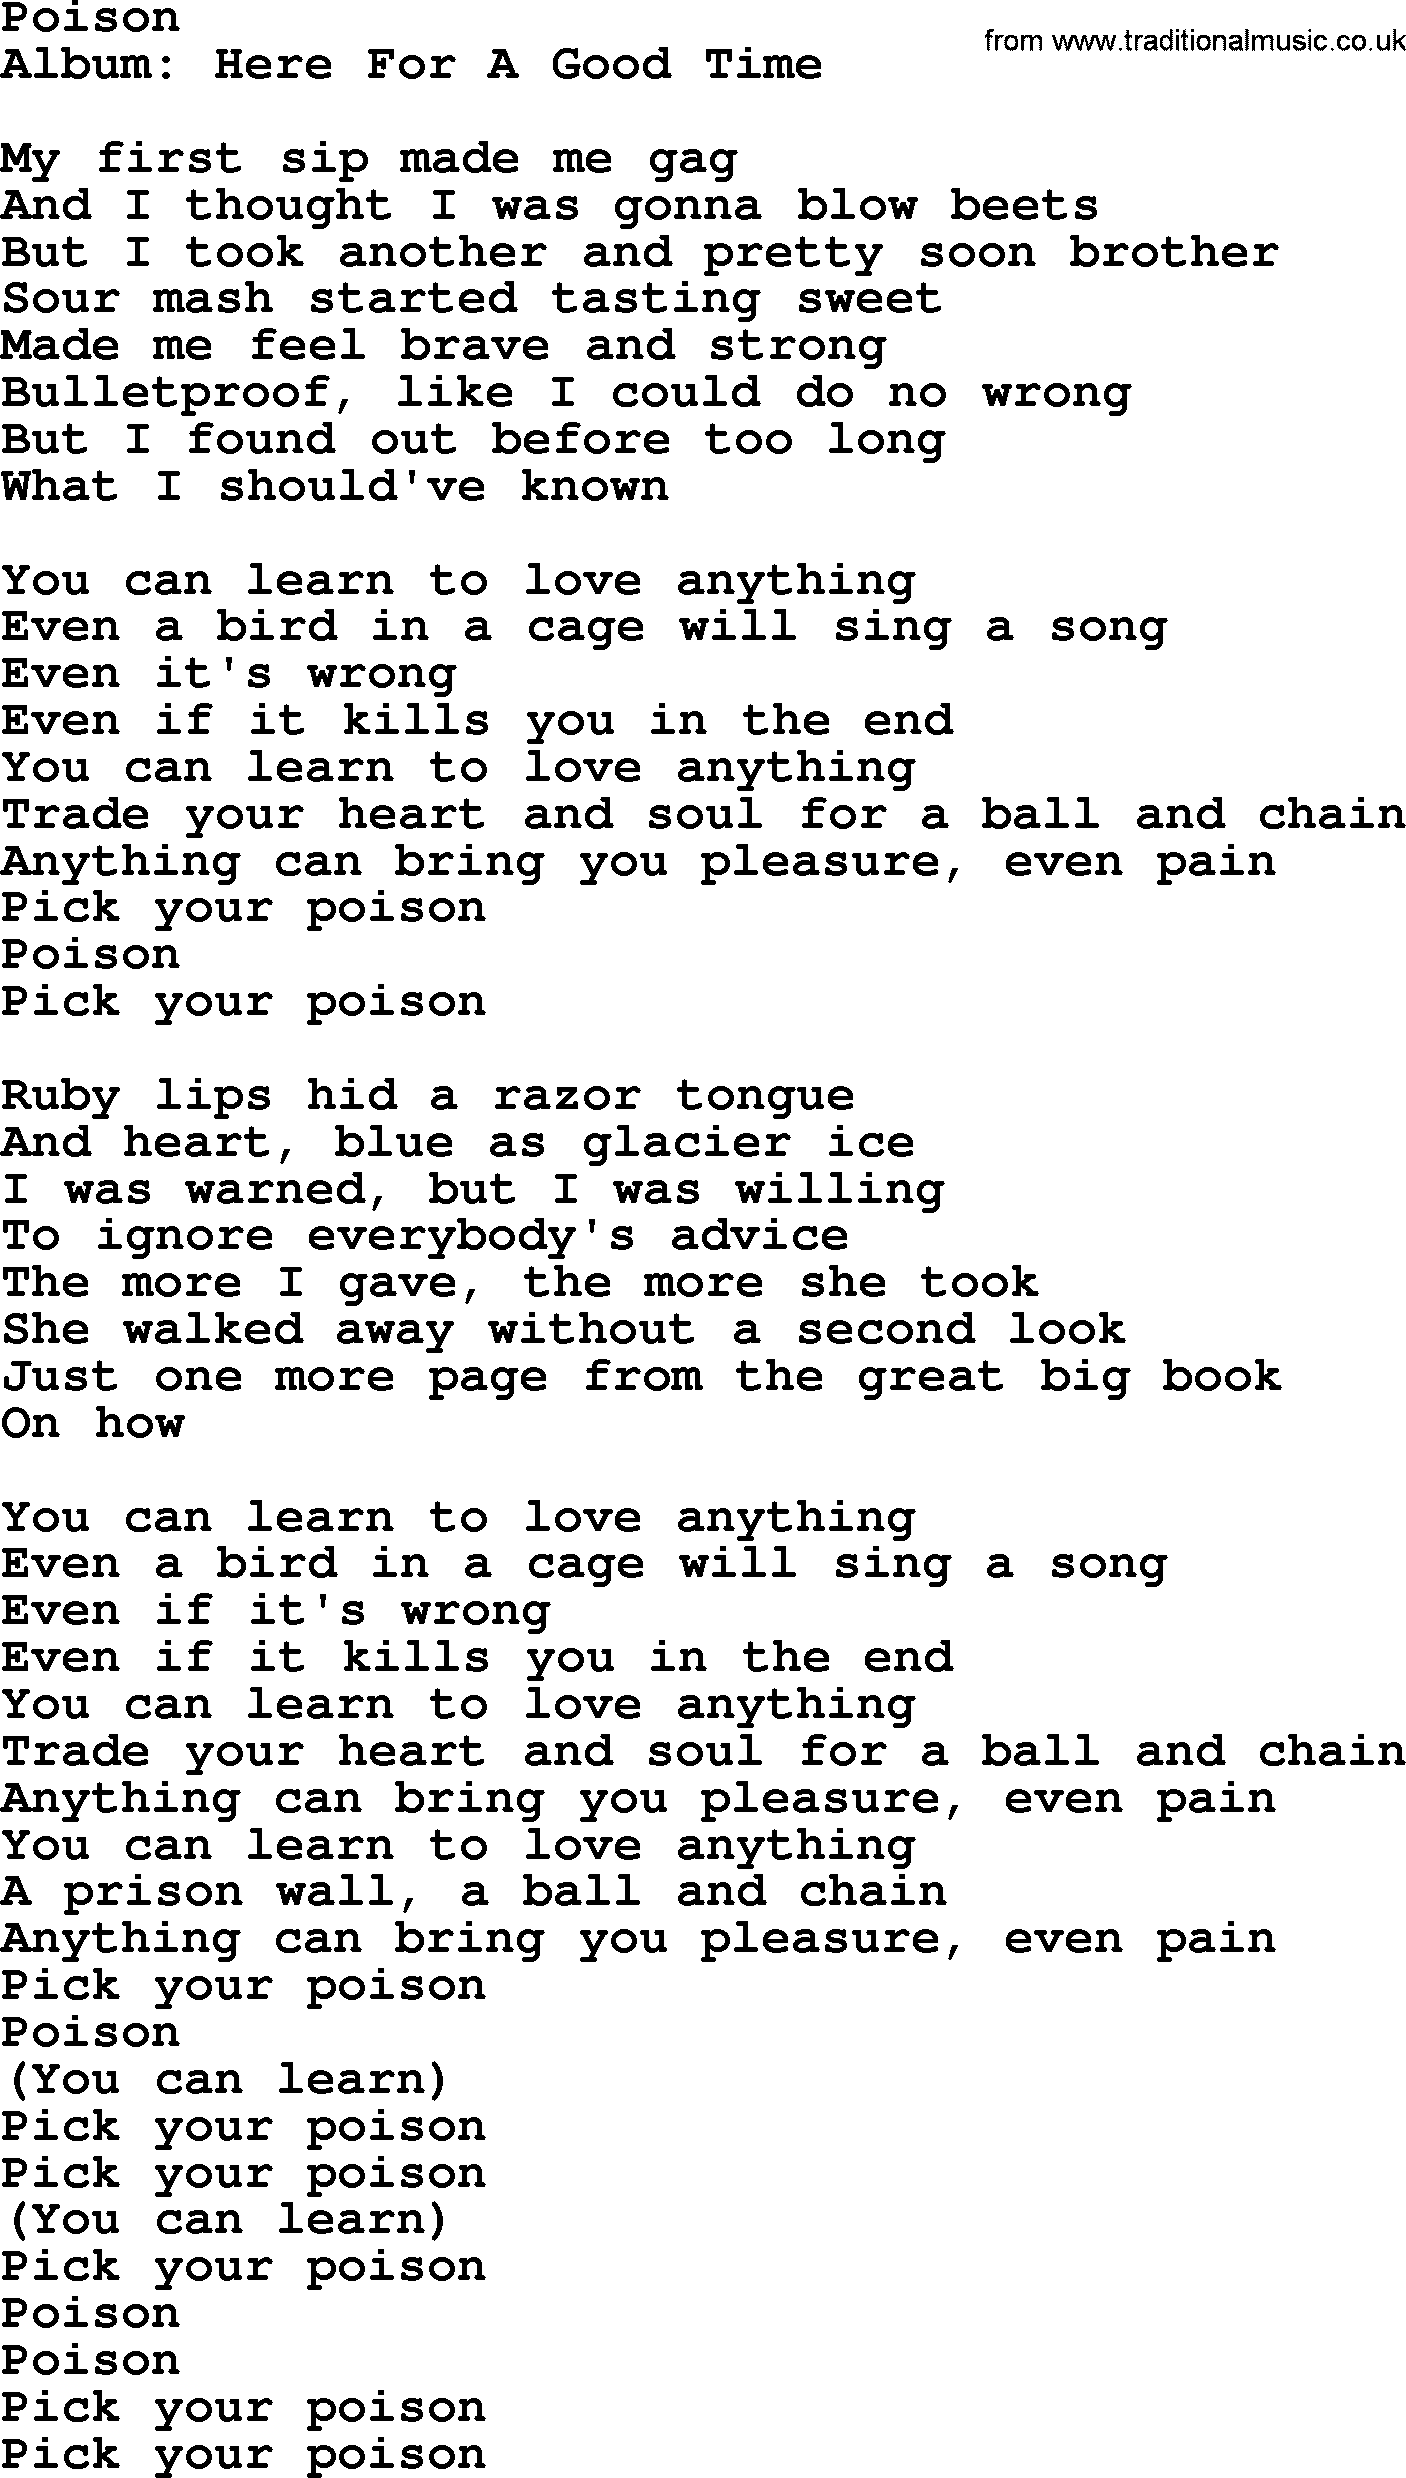 George Strait song: Poison, lyrics